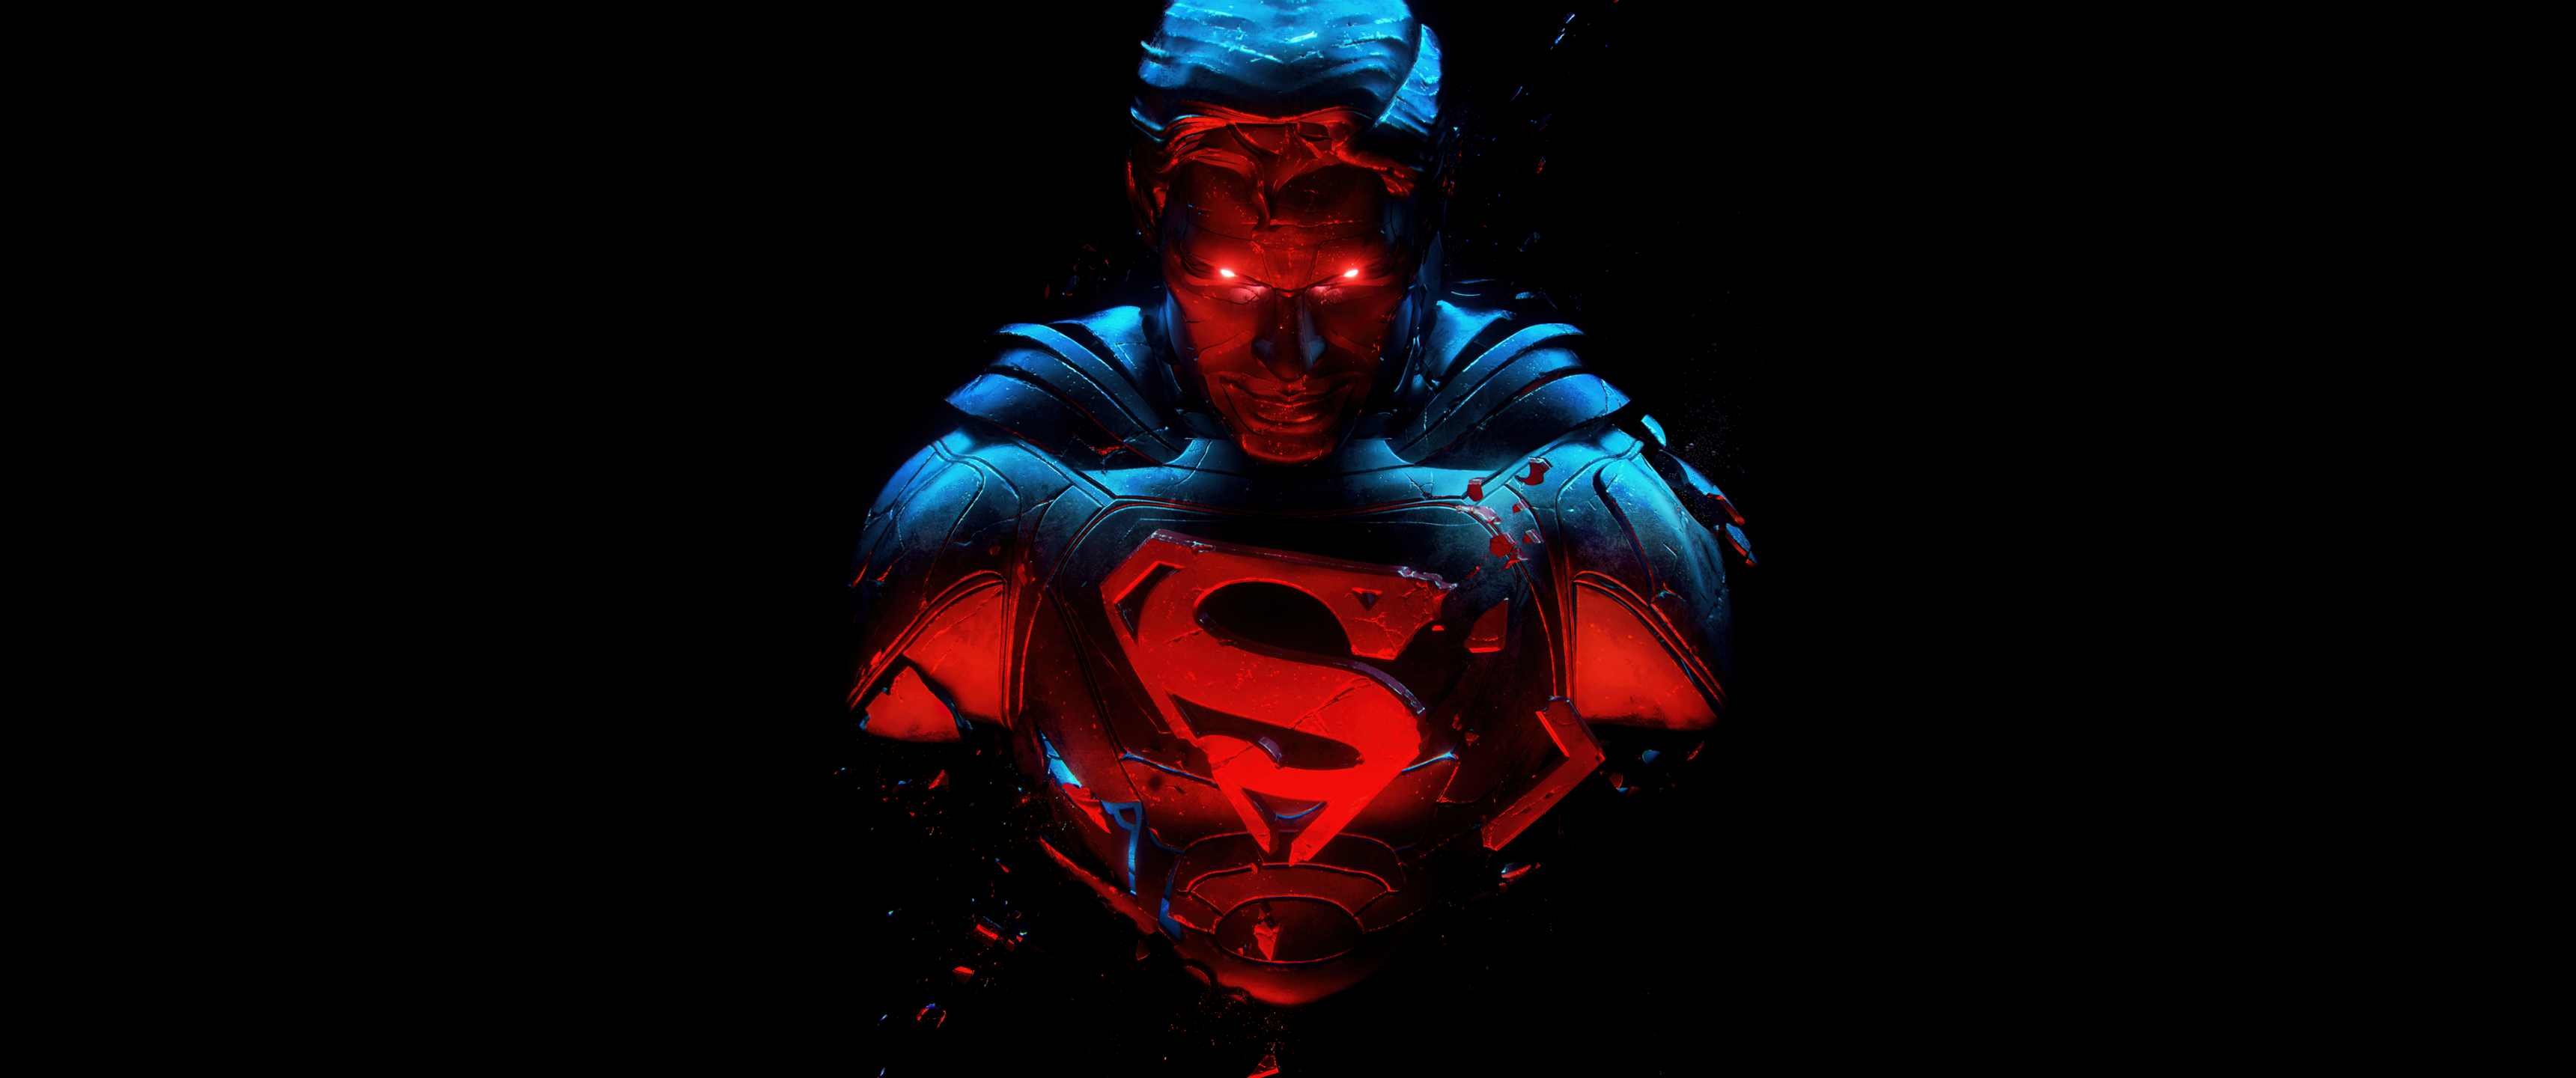 Superman Wallpaper 4K, Man of Steel, Black background